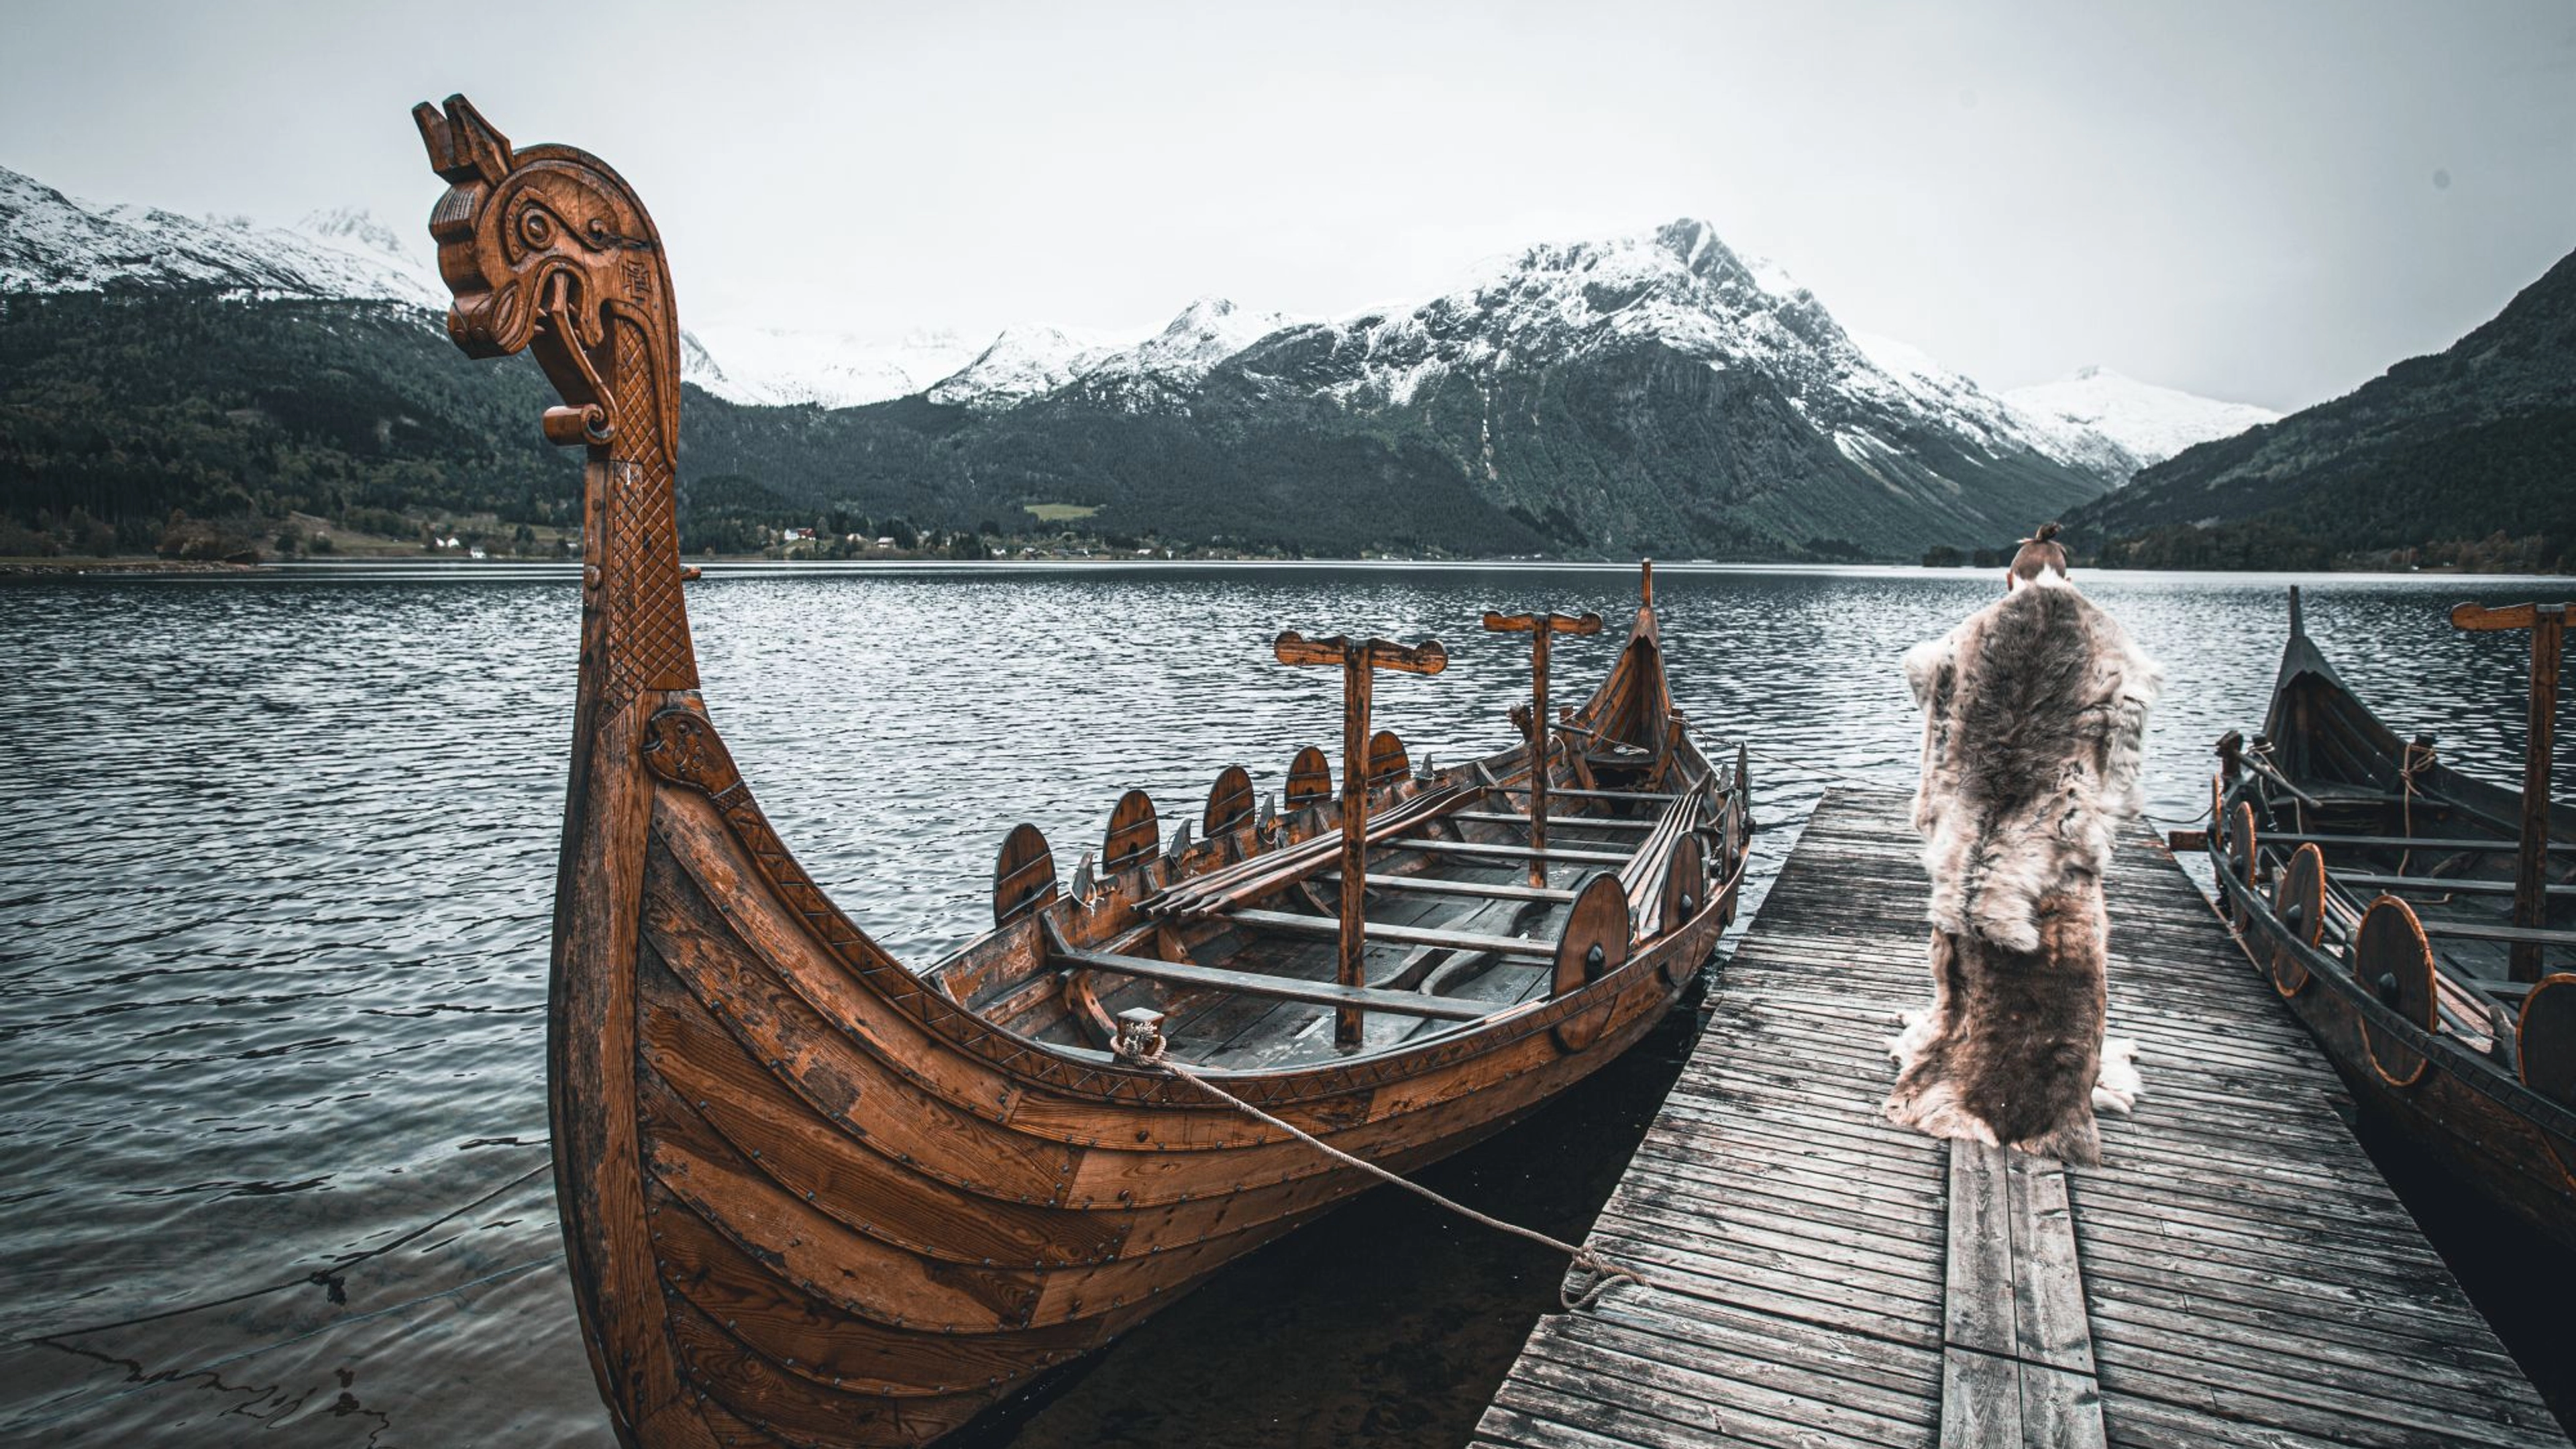 Wiking ship - Norway